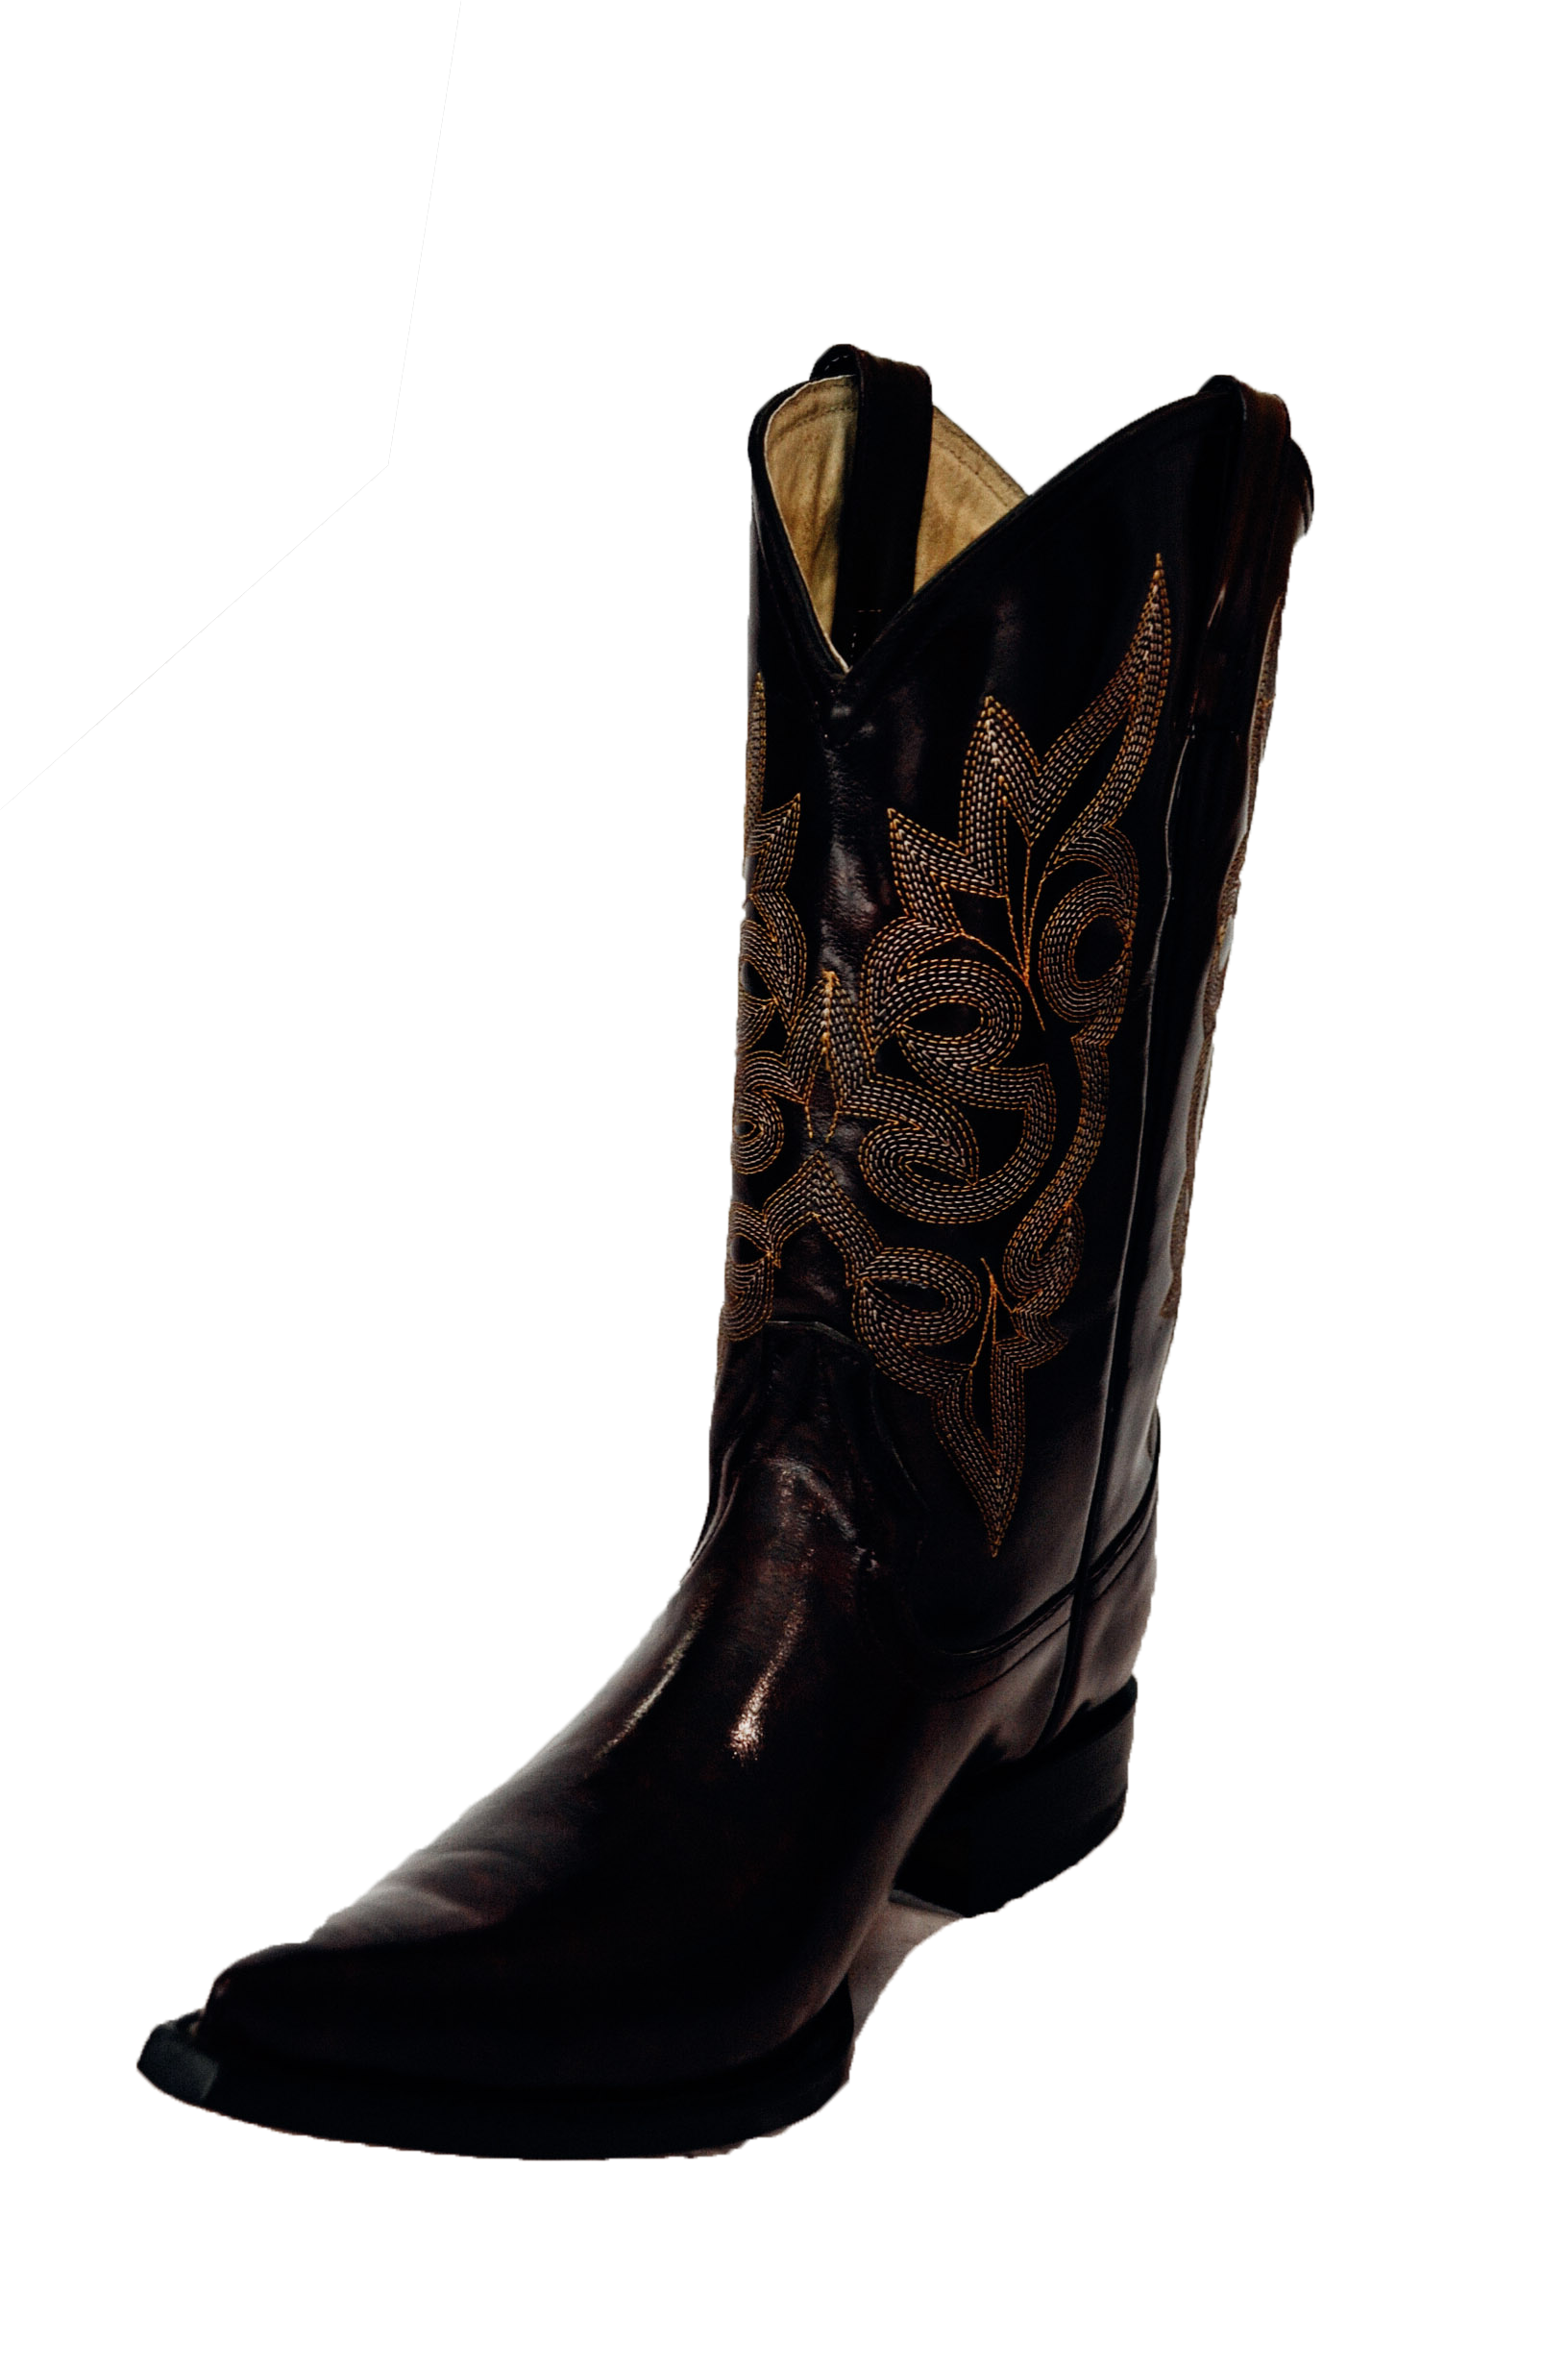 Pair Of Cowboy Boots Transparent Image